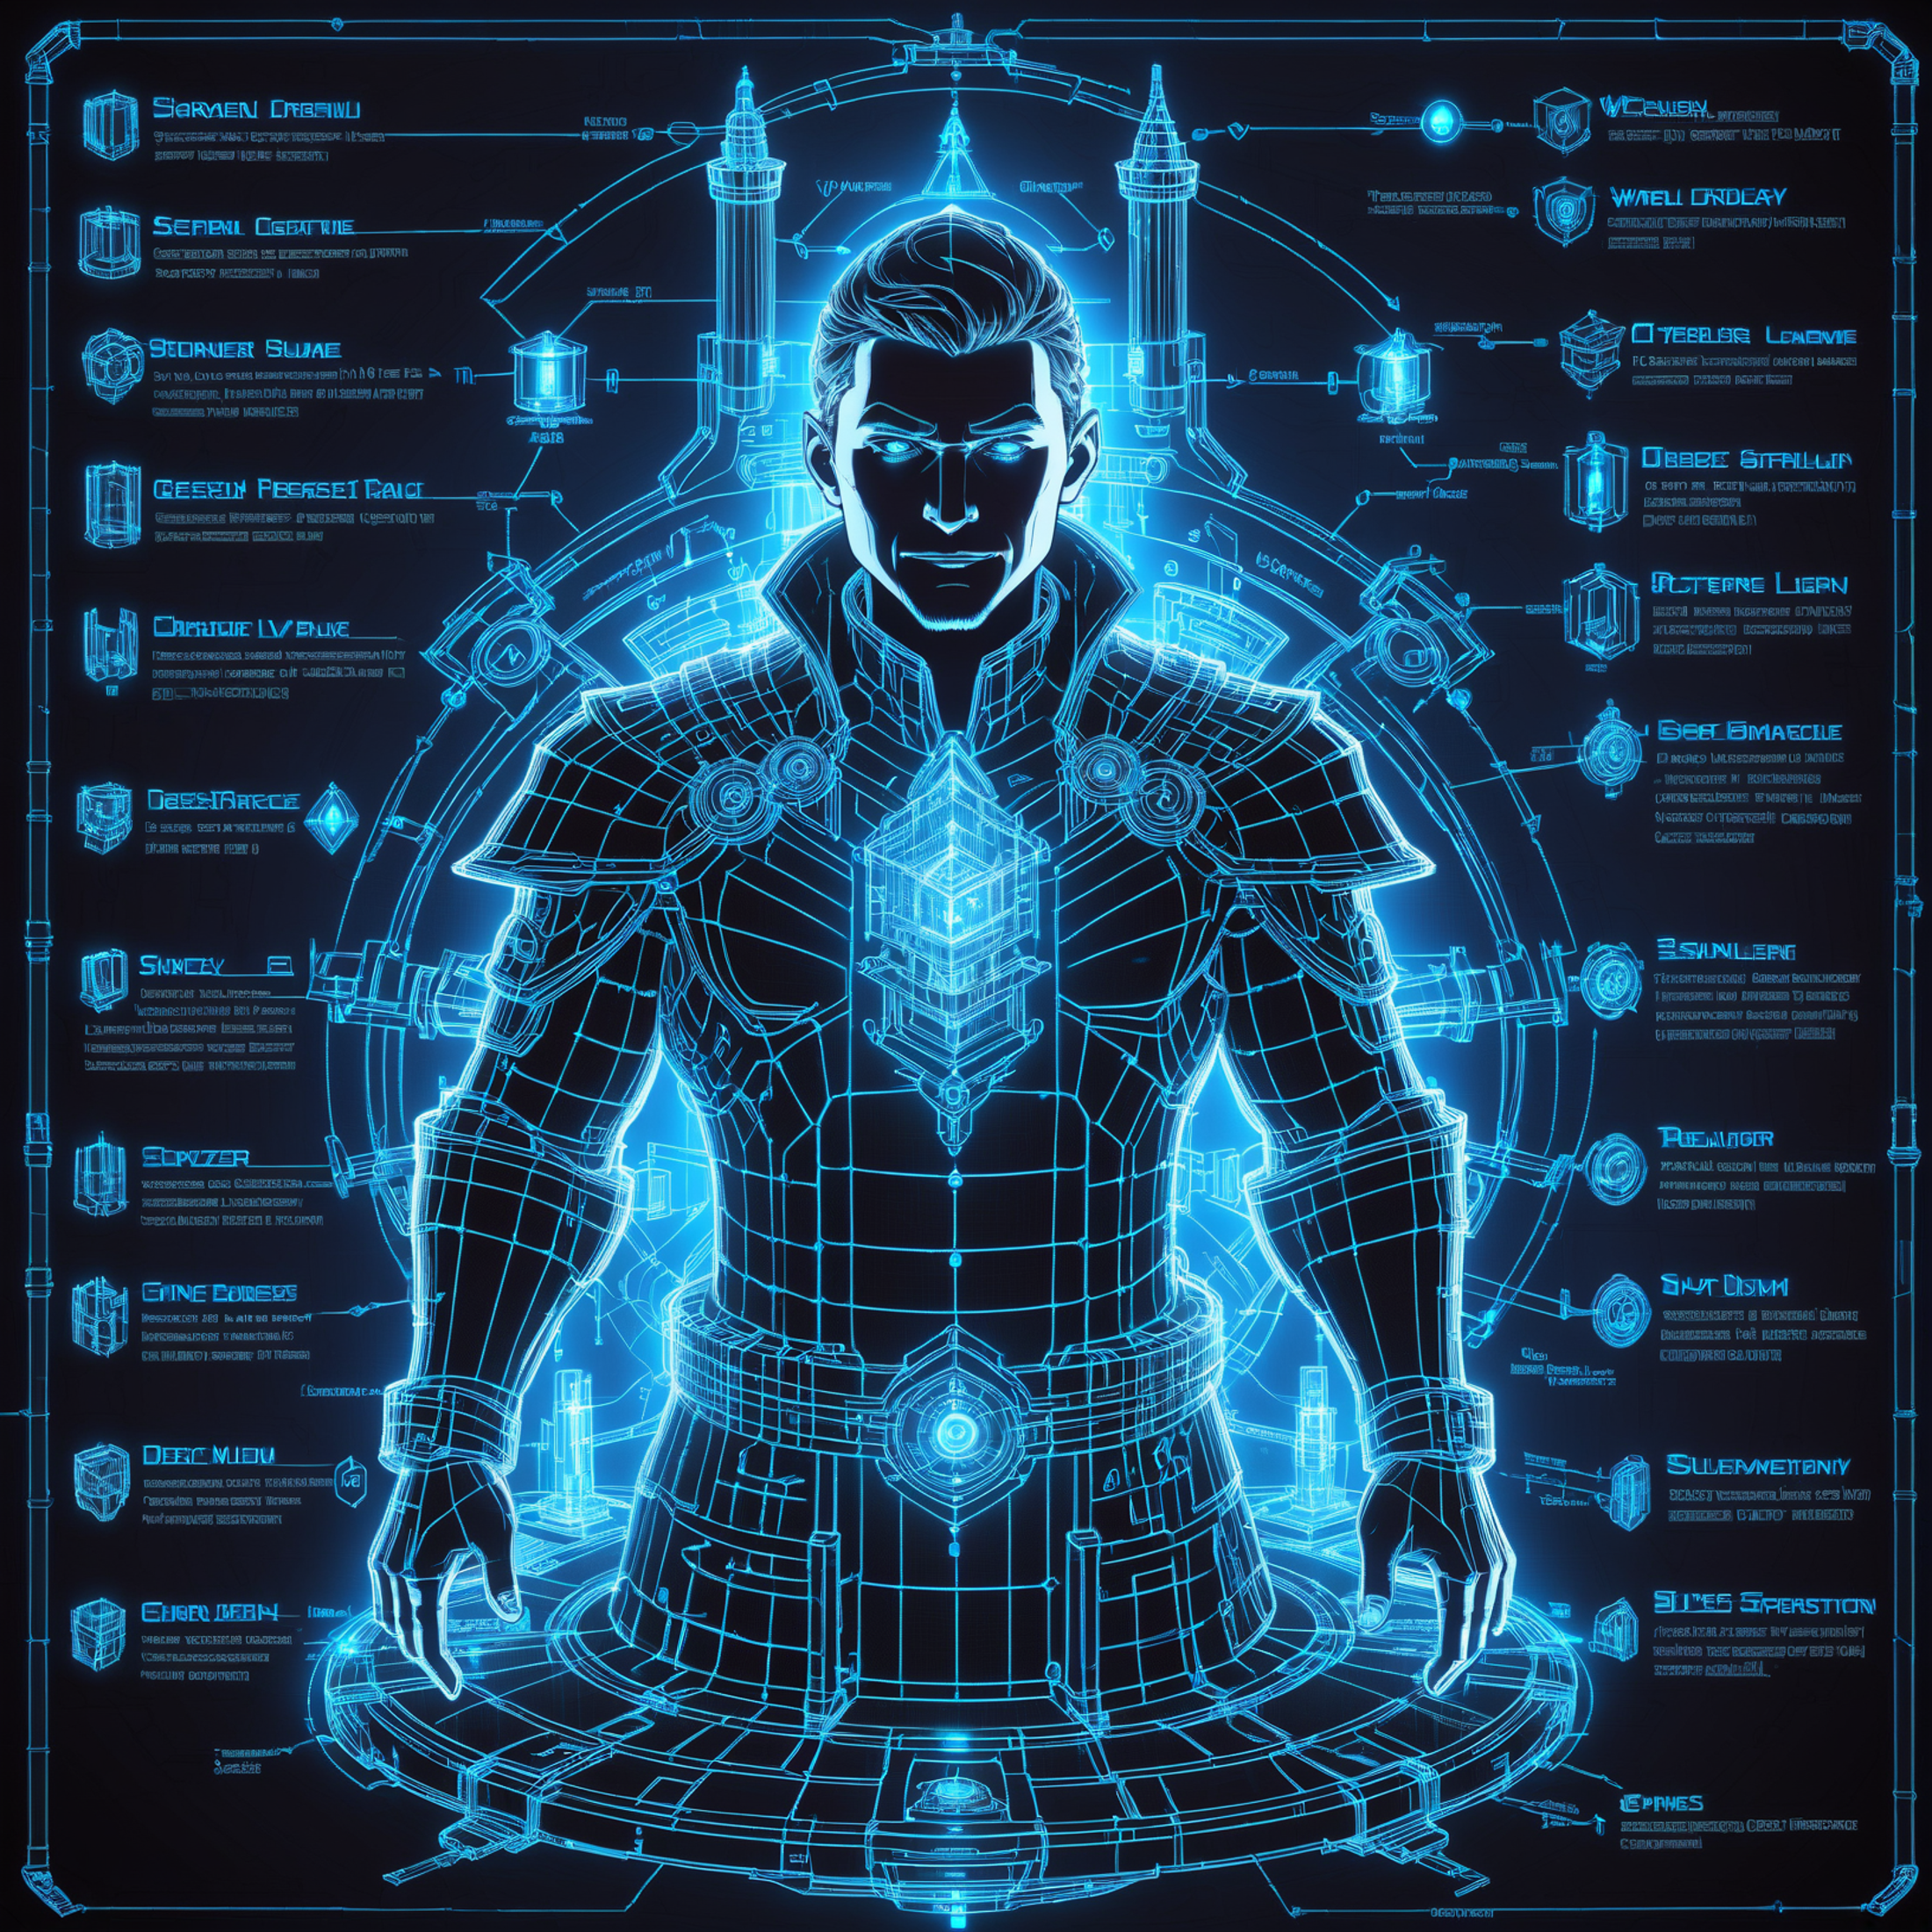 glowing blue on black 3d wireframe, diagram, cyberpunk, <lora:EnvySendNoodzXL01:0>1boy, man, ruggedly handsome, natural su...